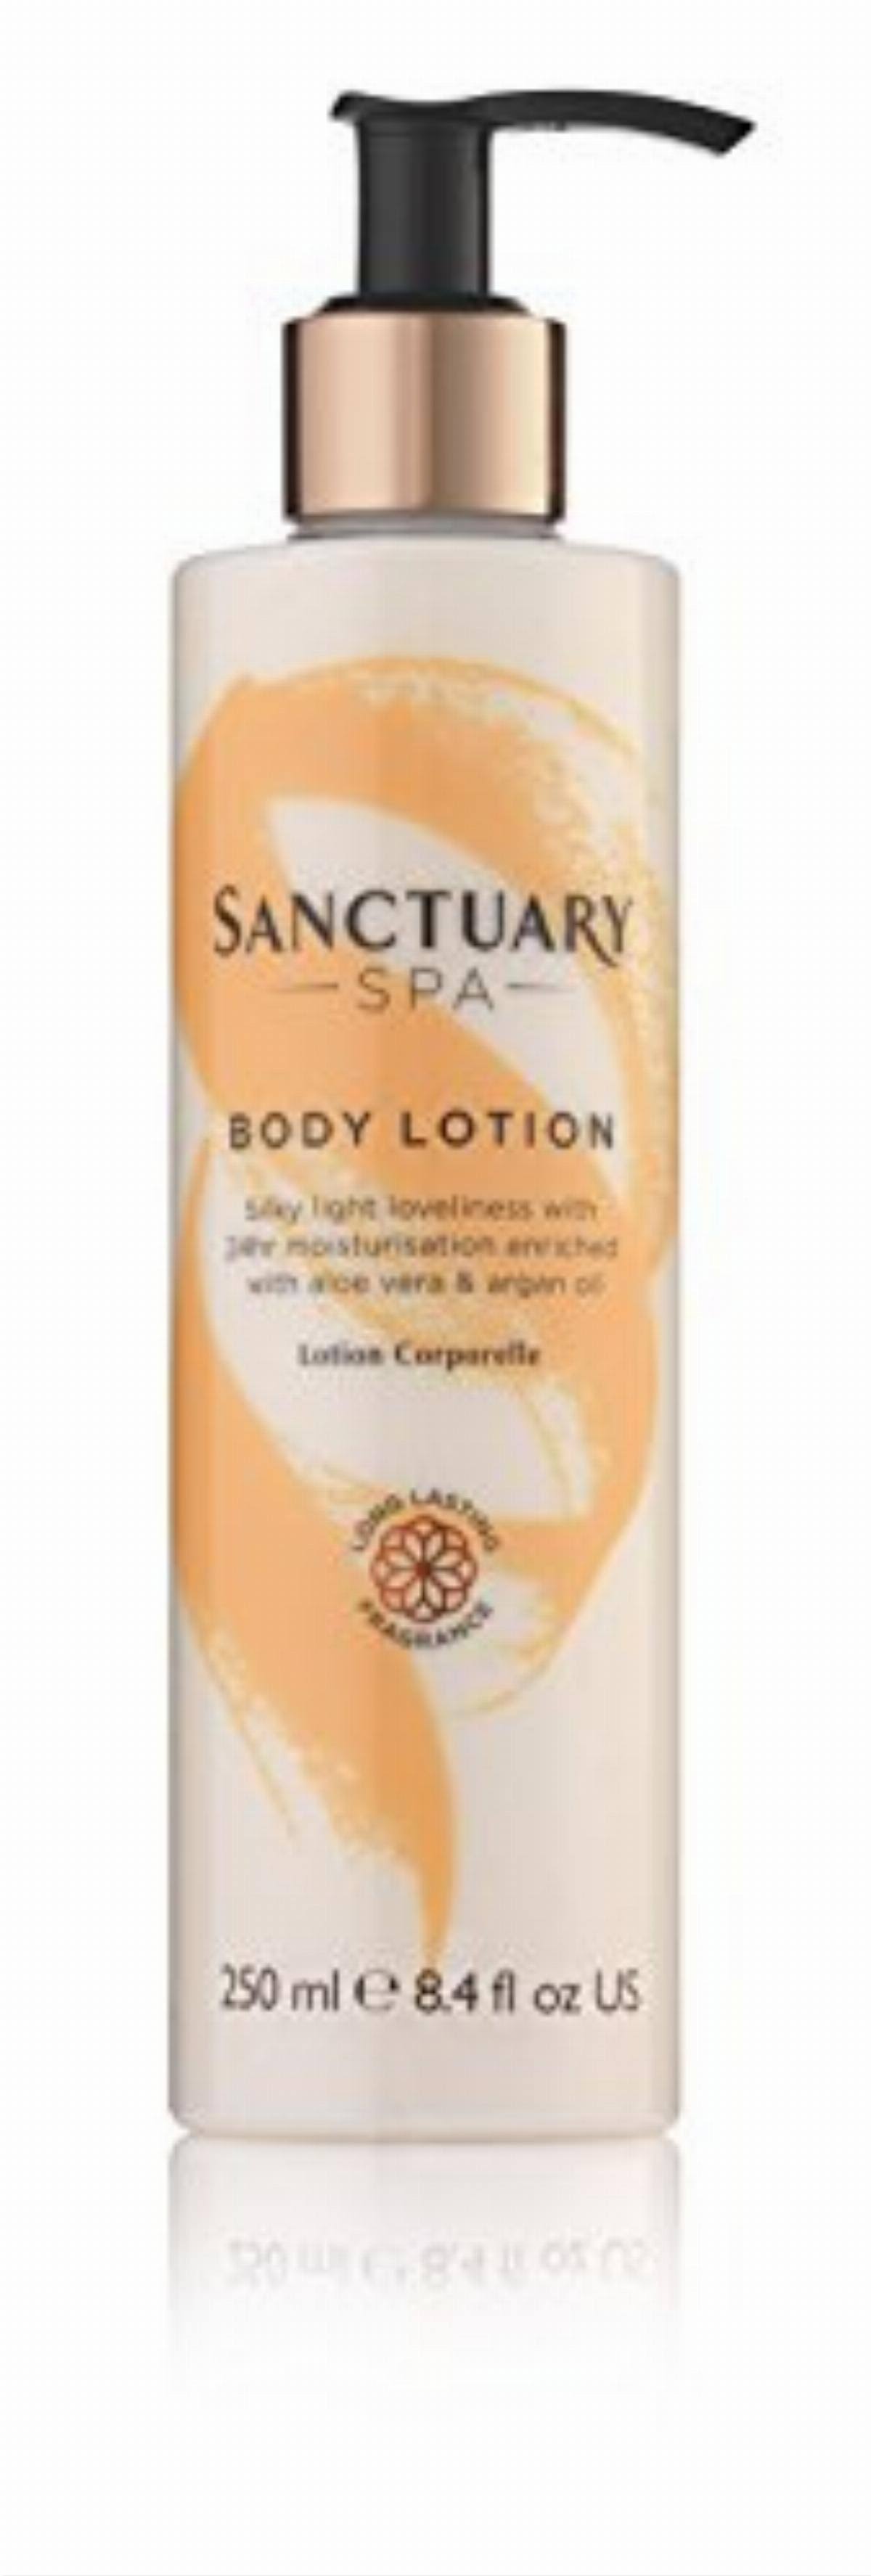 Sanctuary Spa Body Lotion, 250 ml